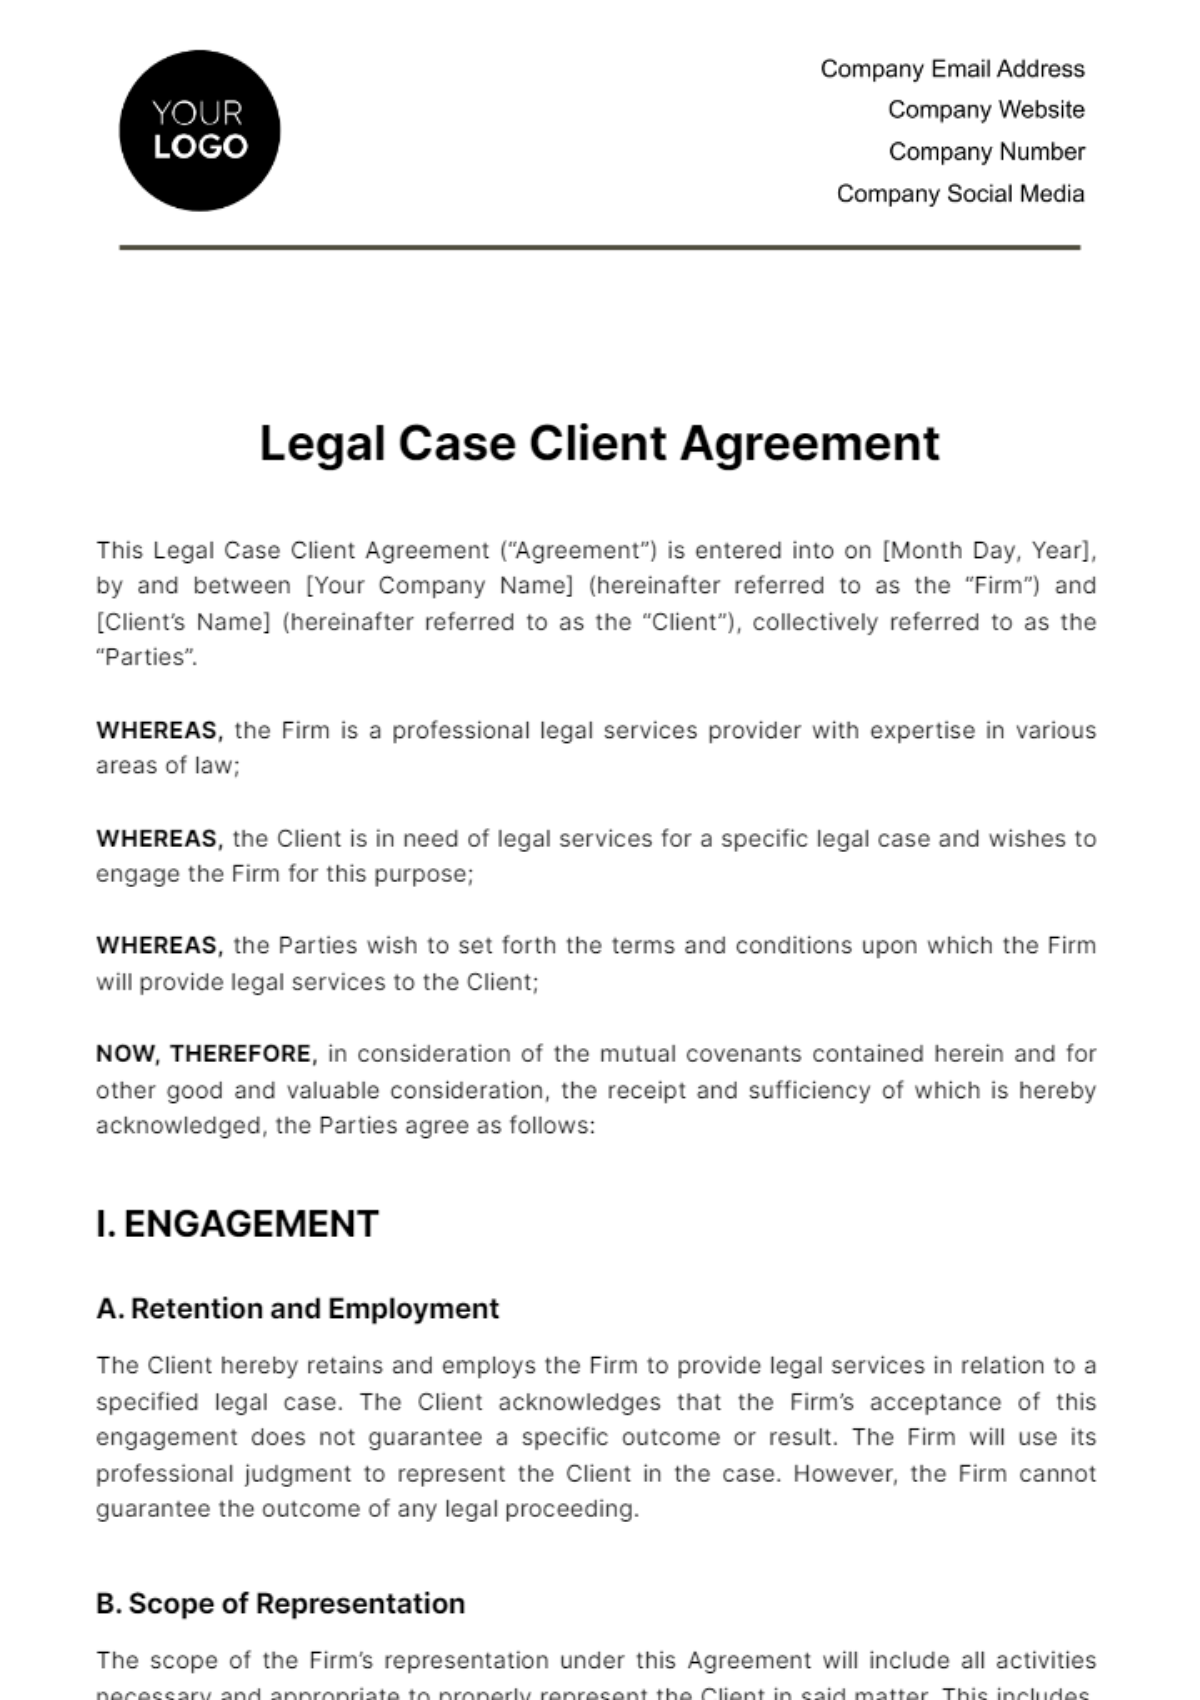 Legal Case Client Agreement Template